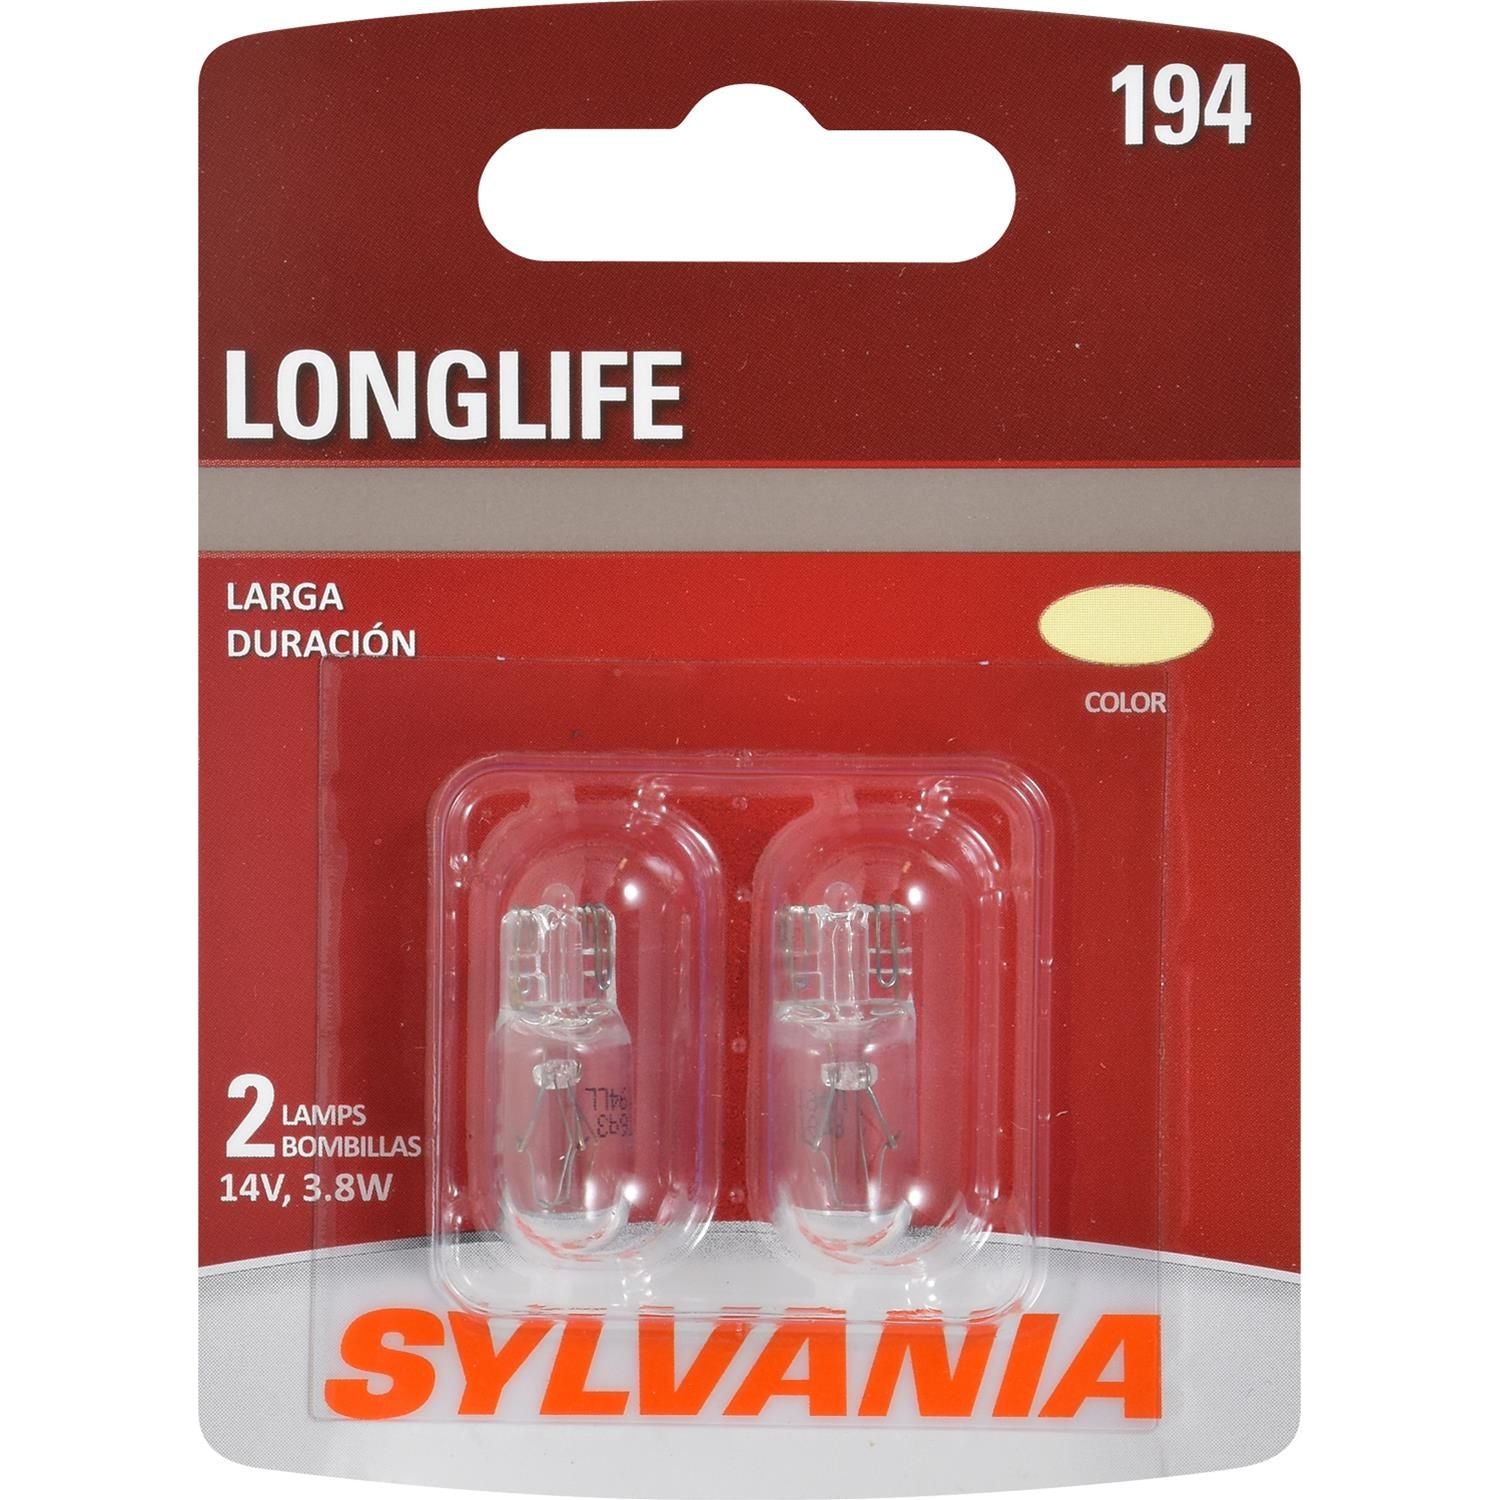 Sylvania Lighting Long Life Incandescent Light Bulbs 194LL.BP2